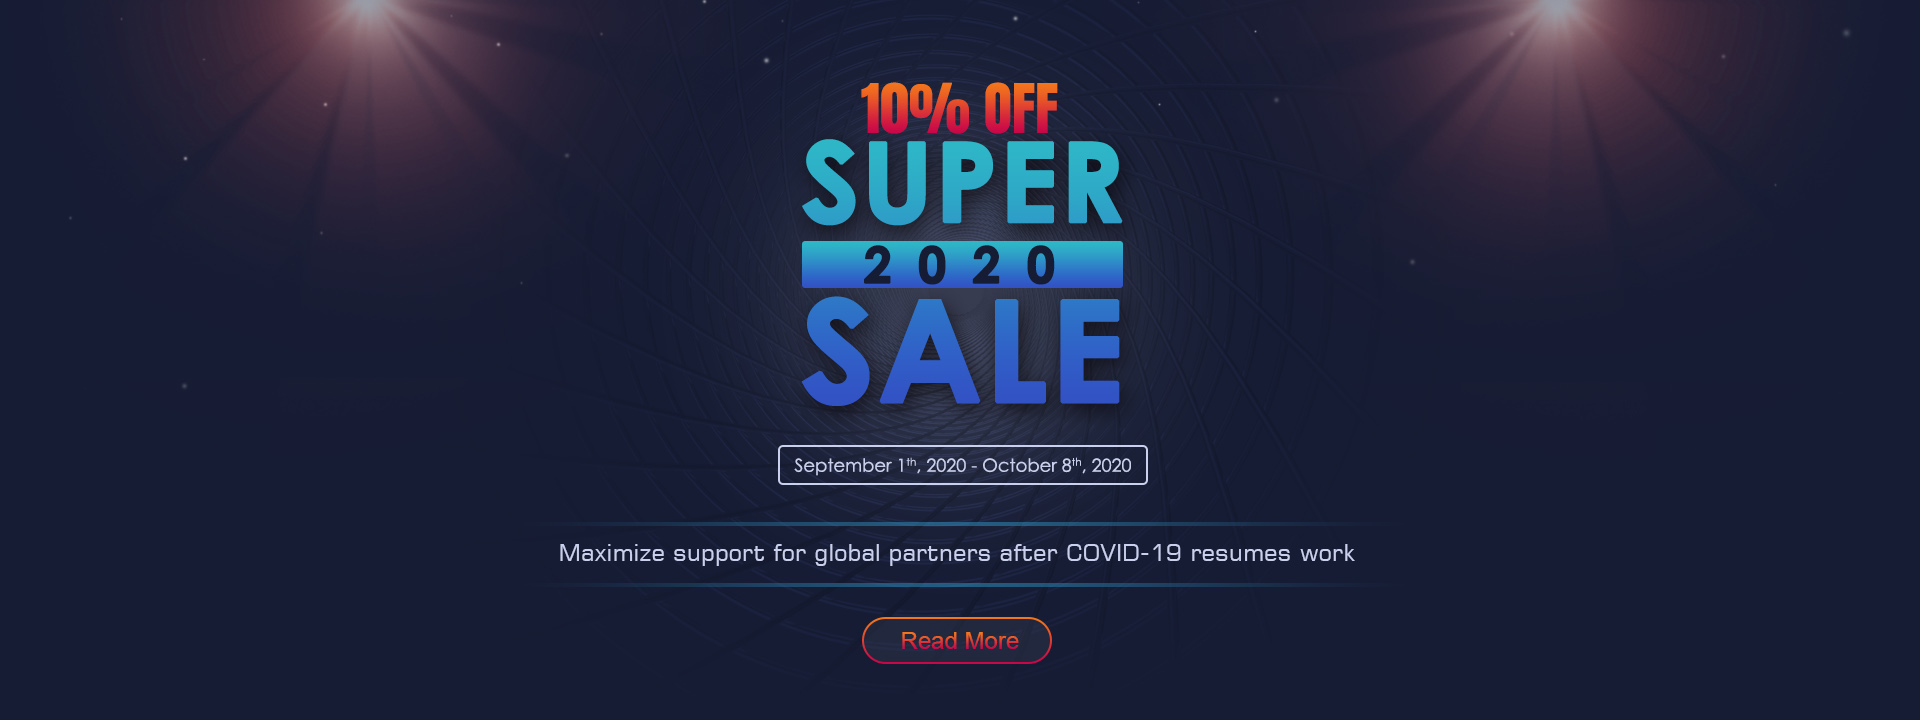 2020 Super Sale